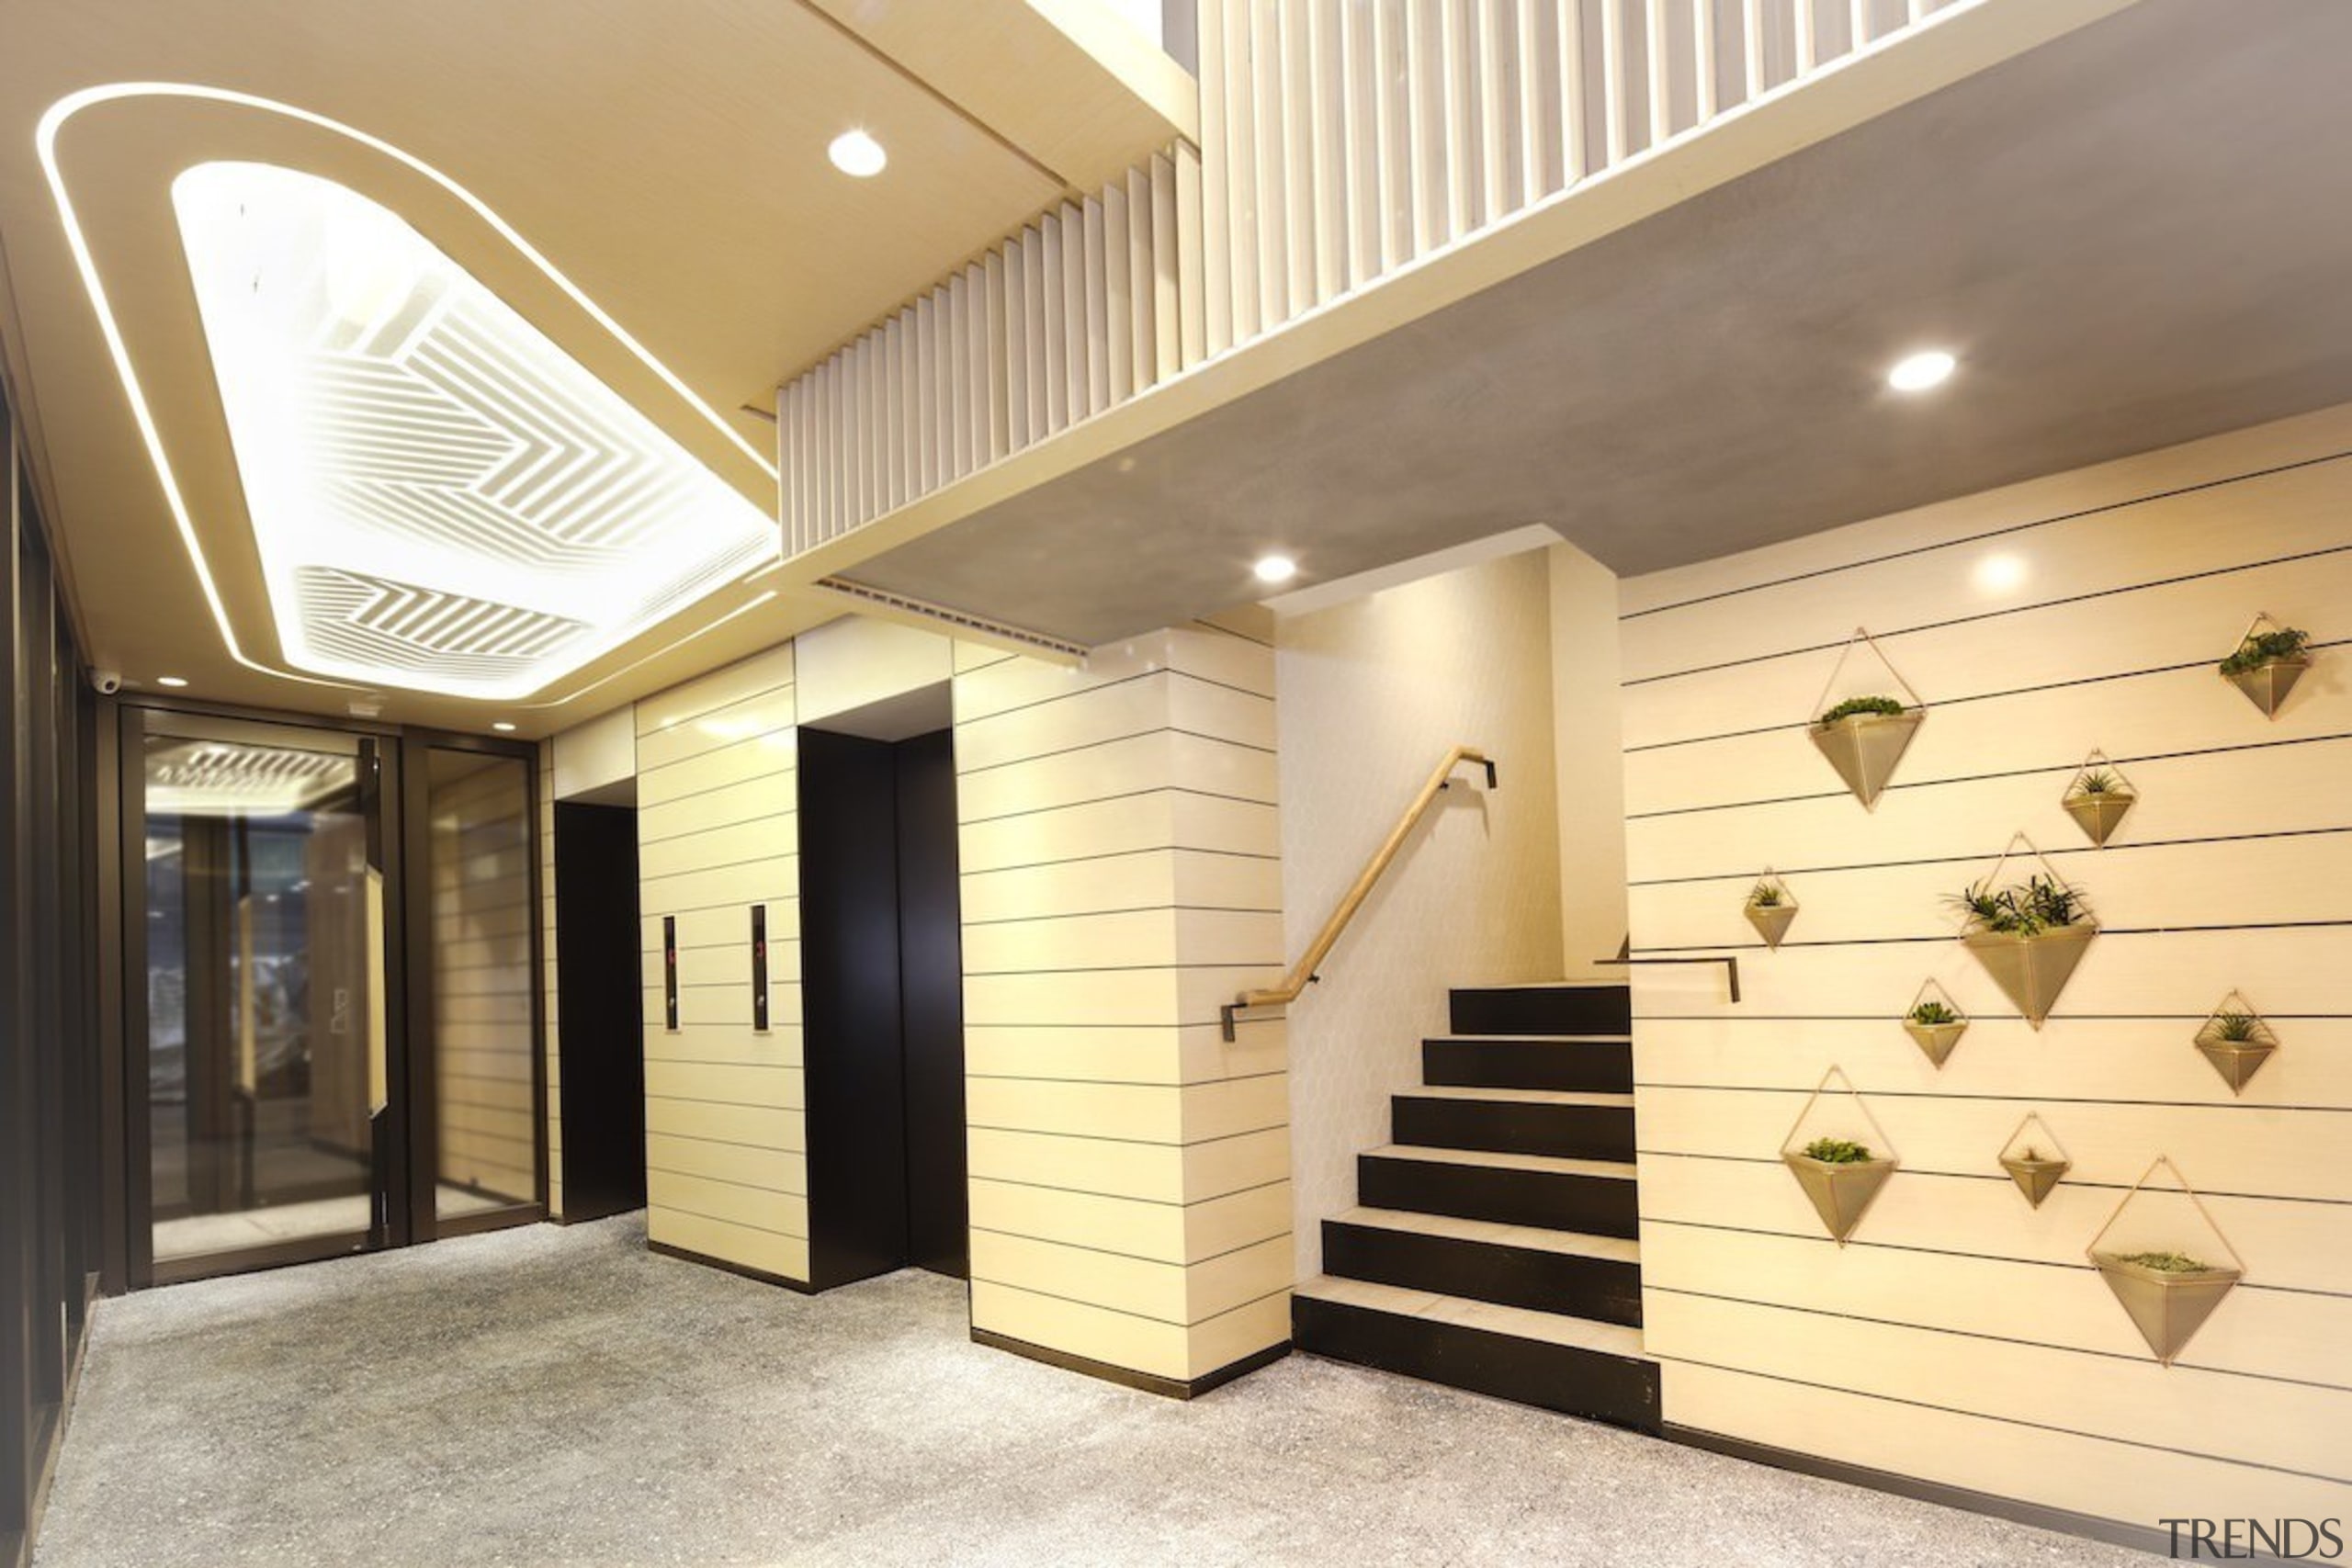 Hotel Ease Access - Hotel Ease Access - ceiling, interior design, lobby, orange